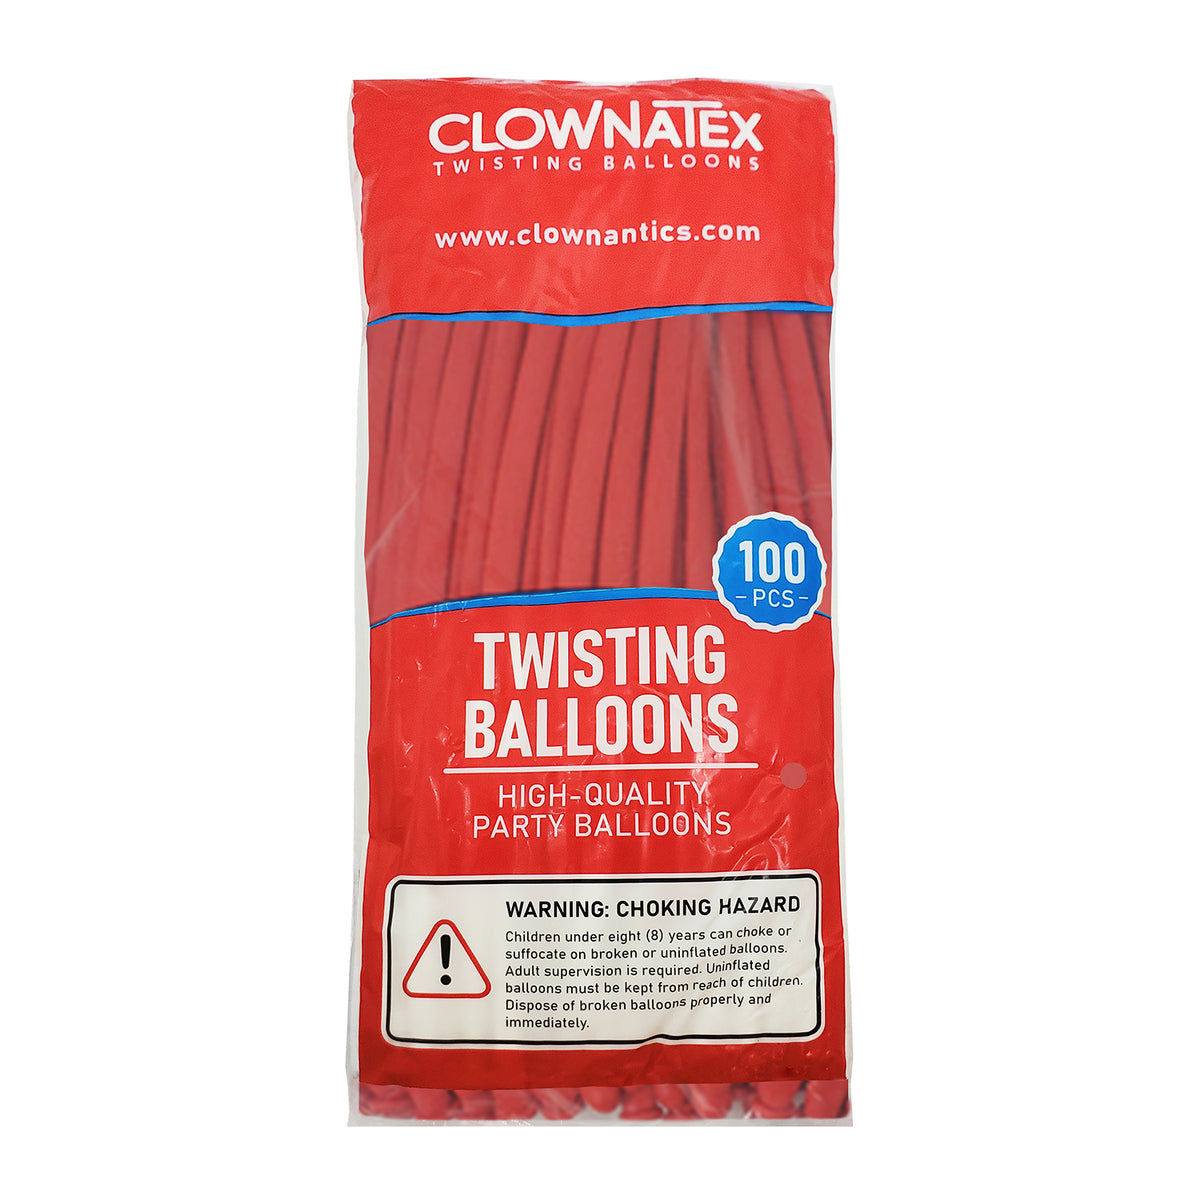 Clownatex 260 Twisting Balloons - Red (100/bag)